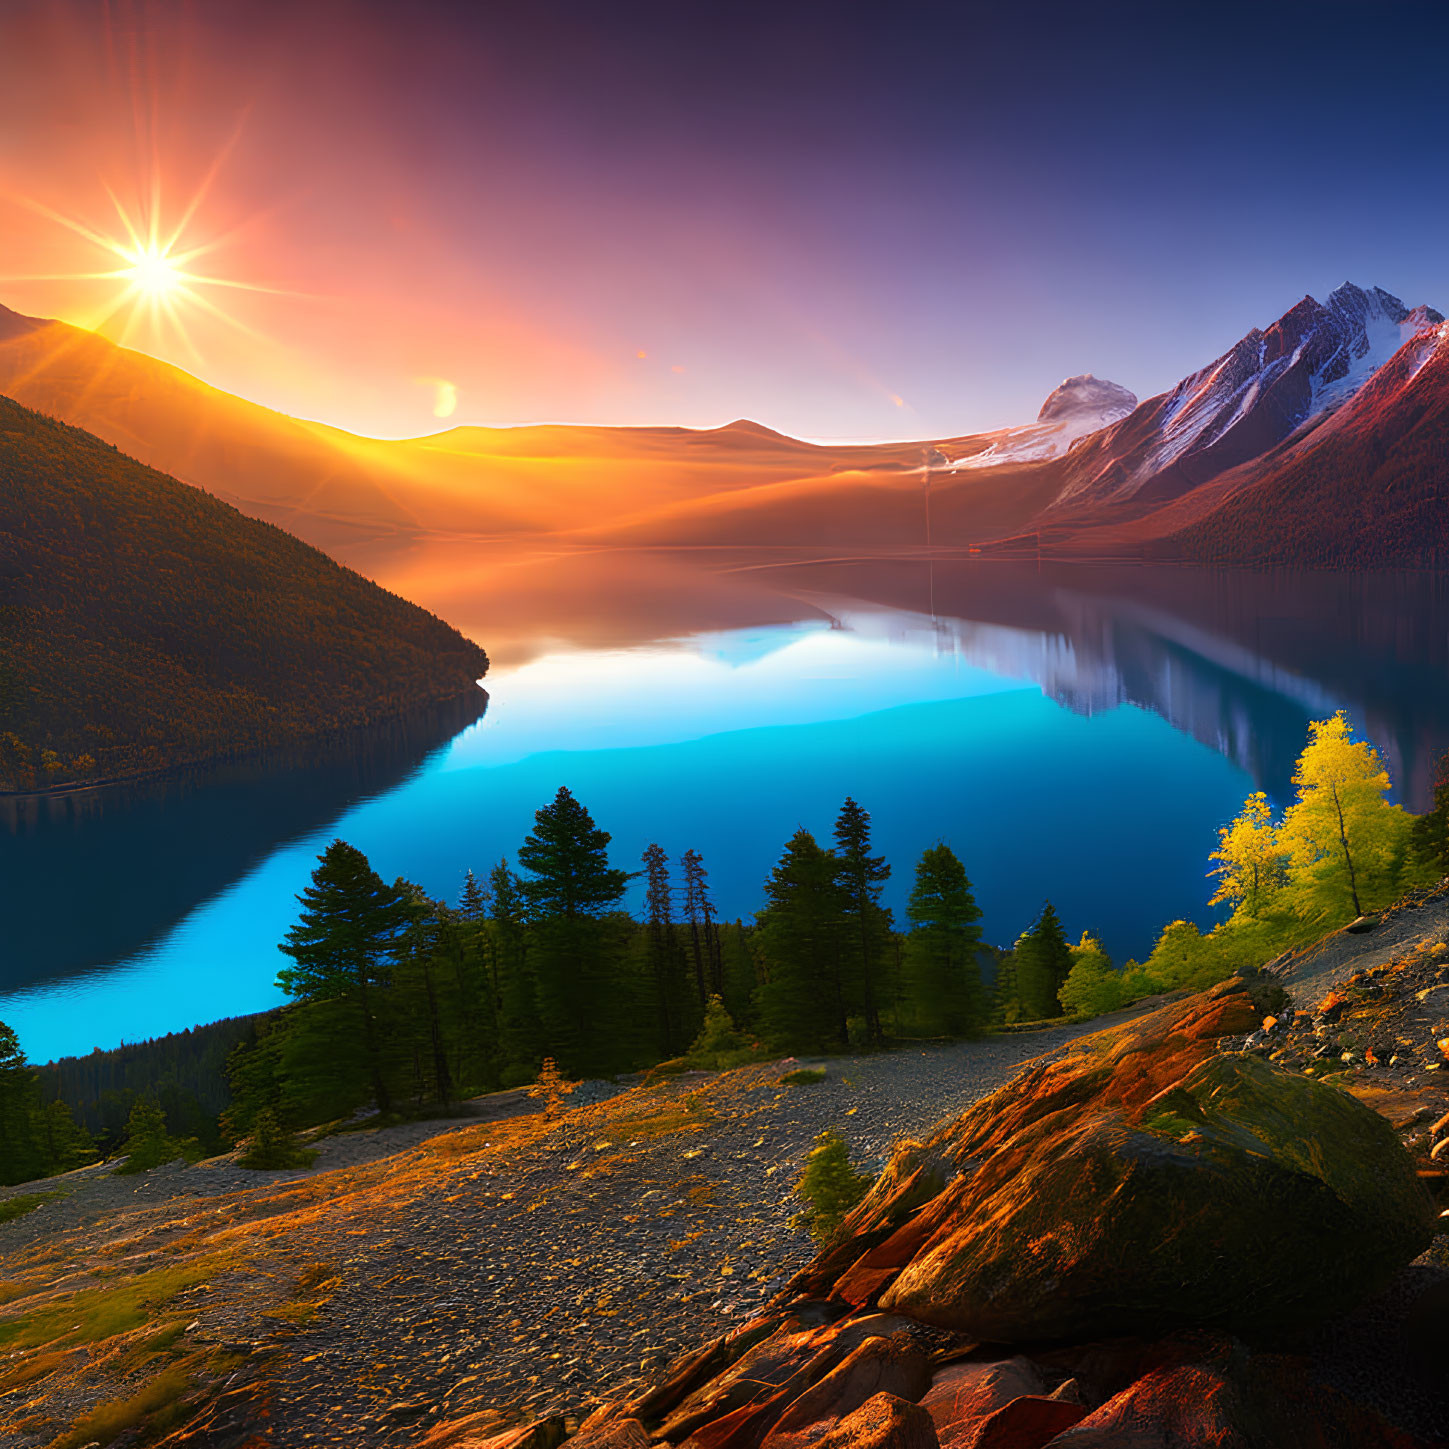 Scenic mountain lake sunset with autumn foliage and starburst sky